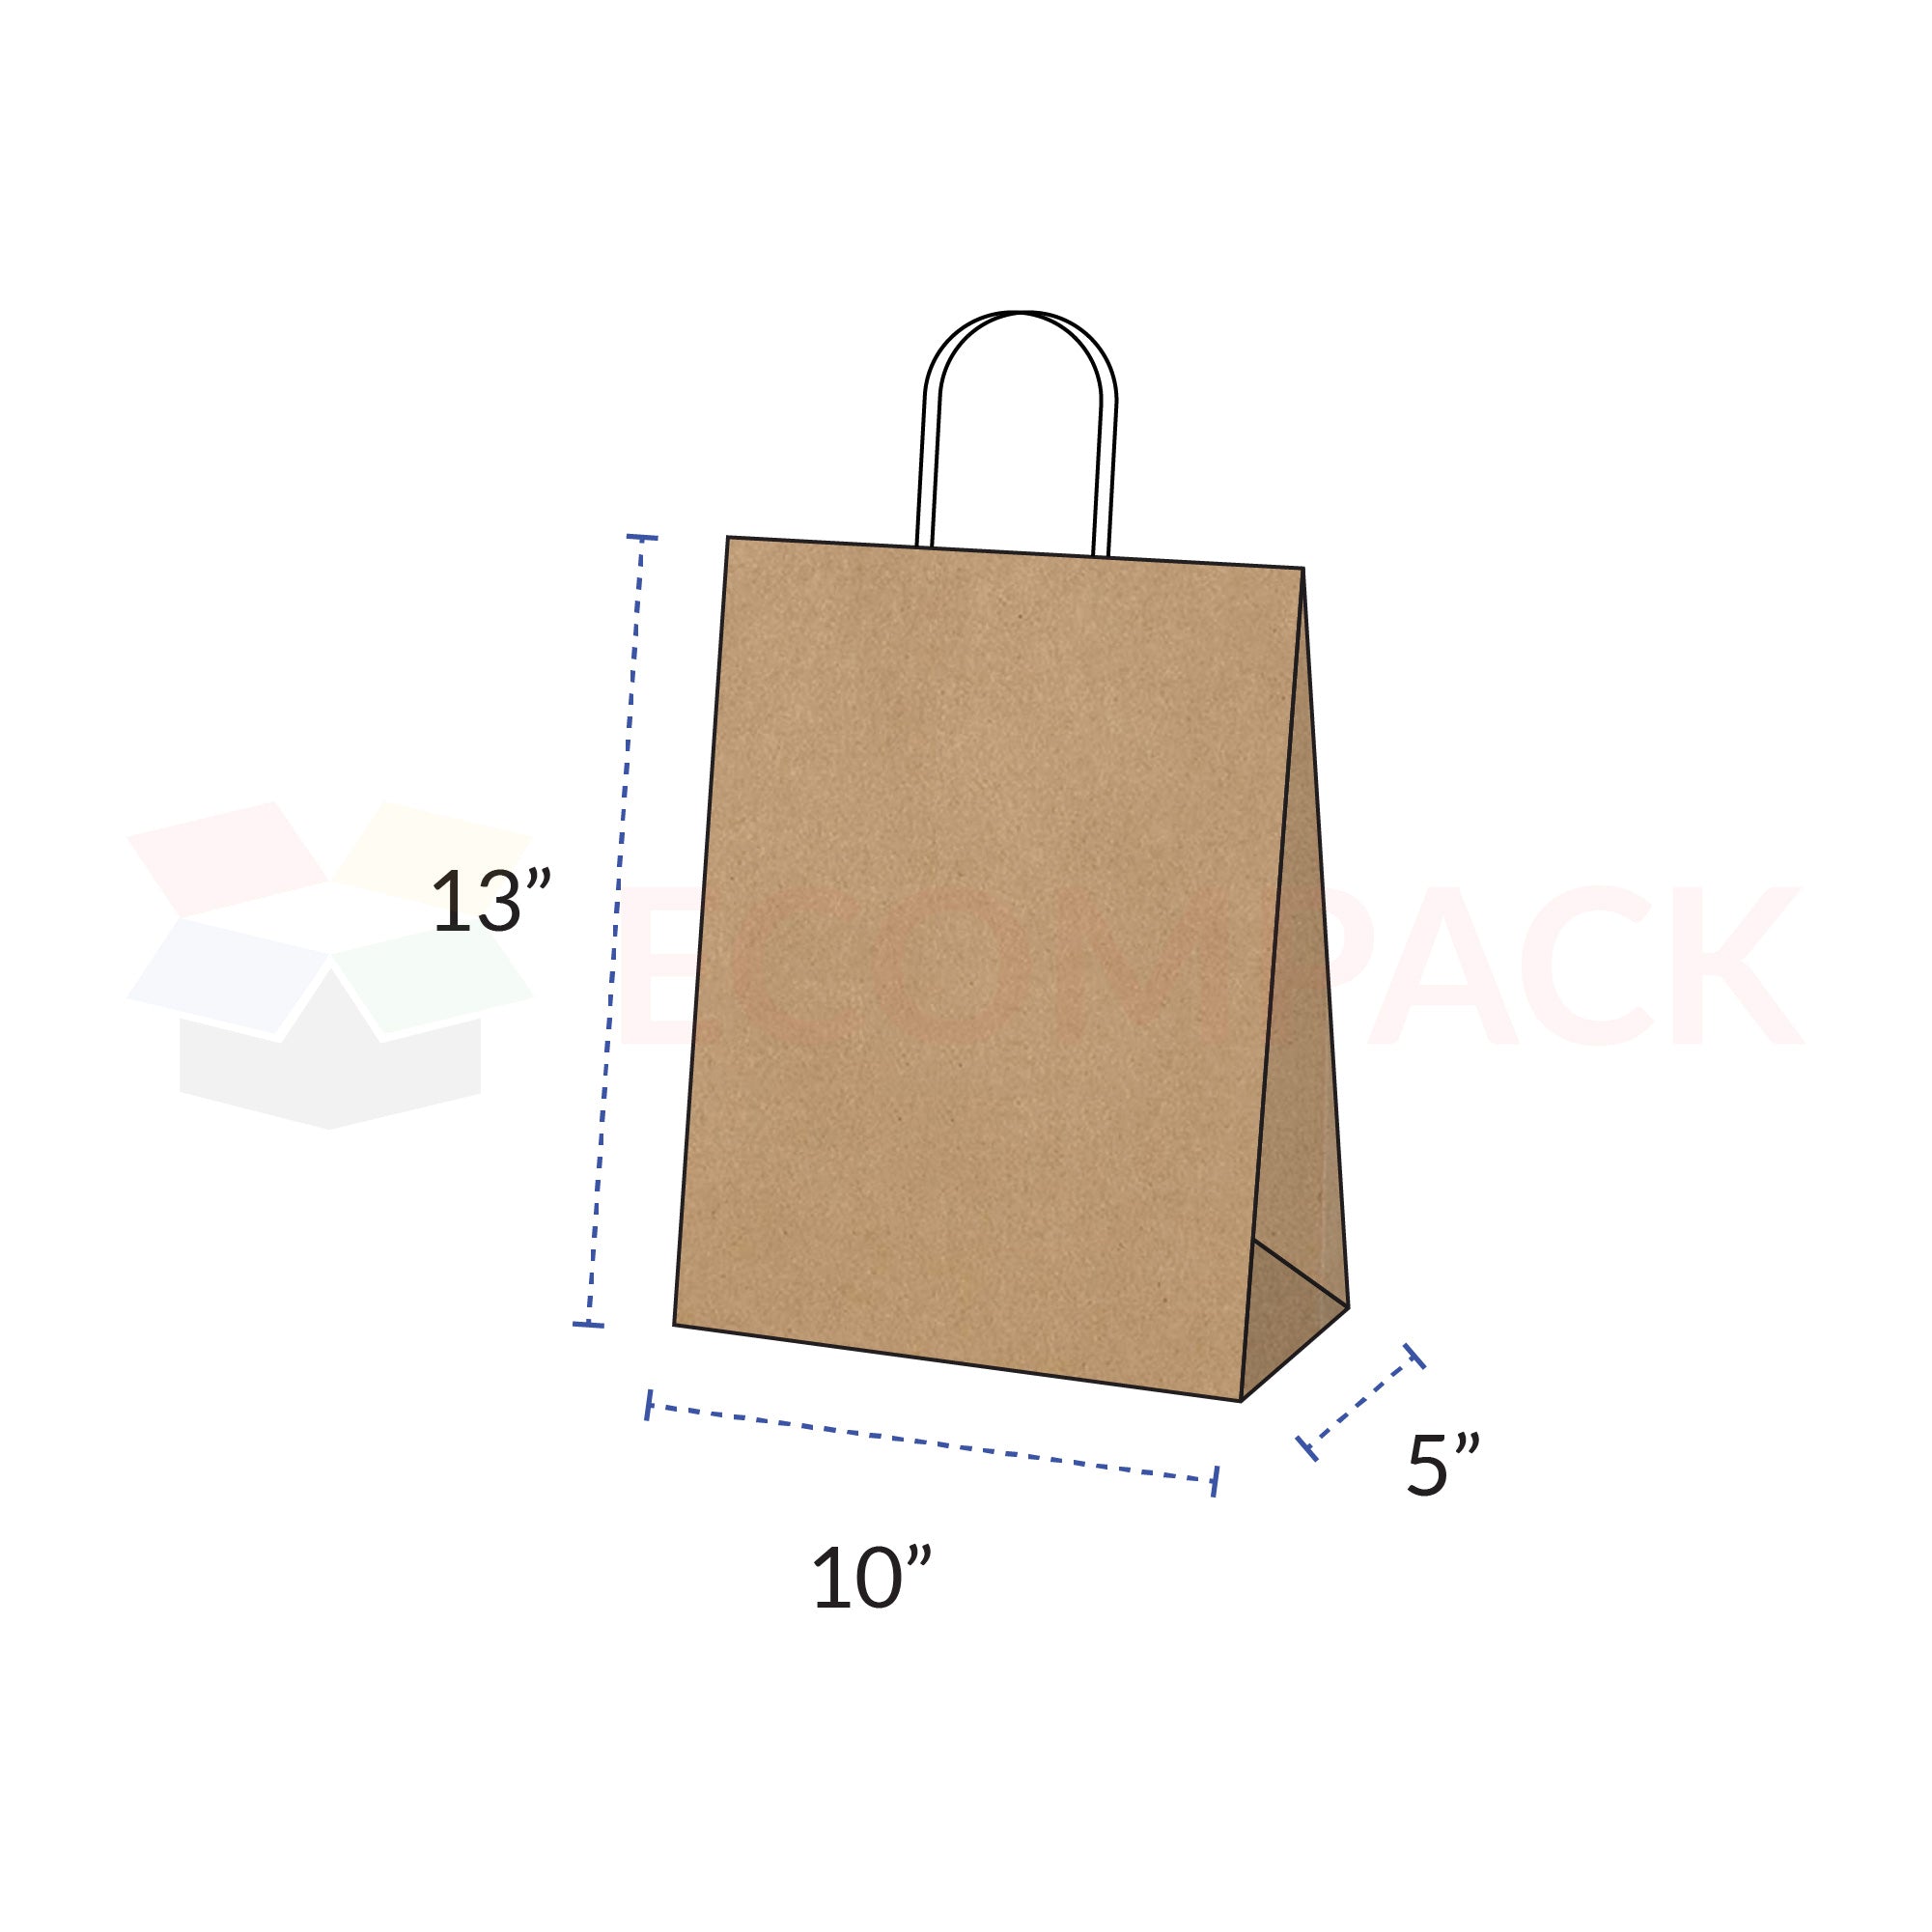 Extra Large Brown Kraft Twist Handle Paper Carrier Bags